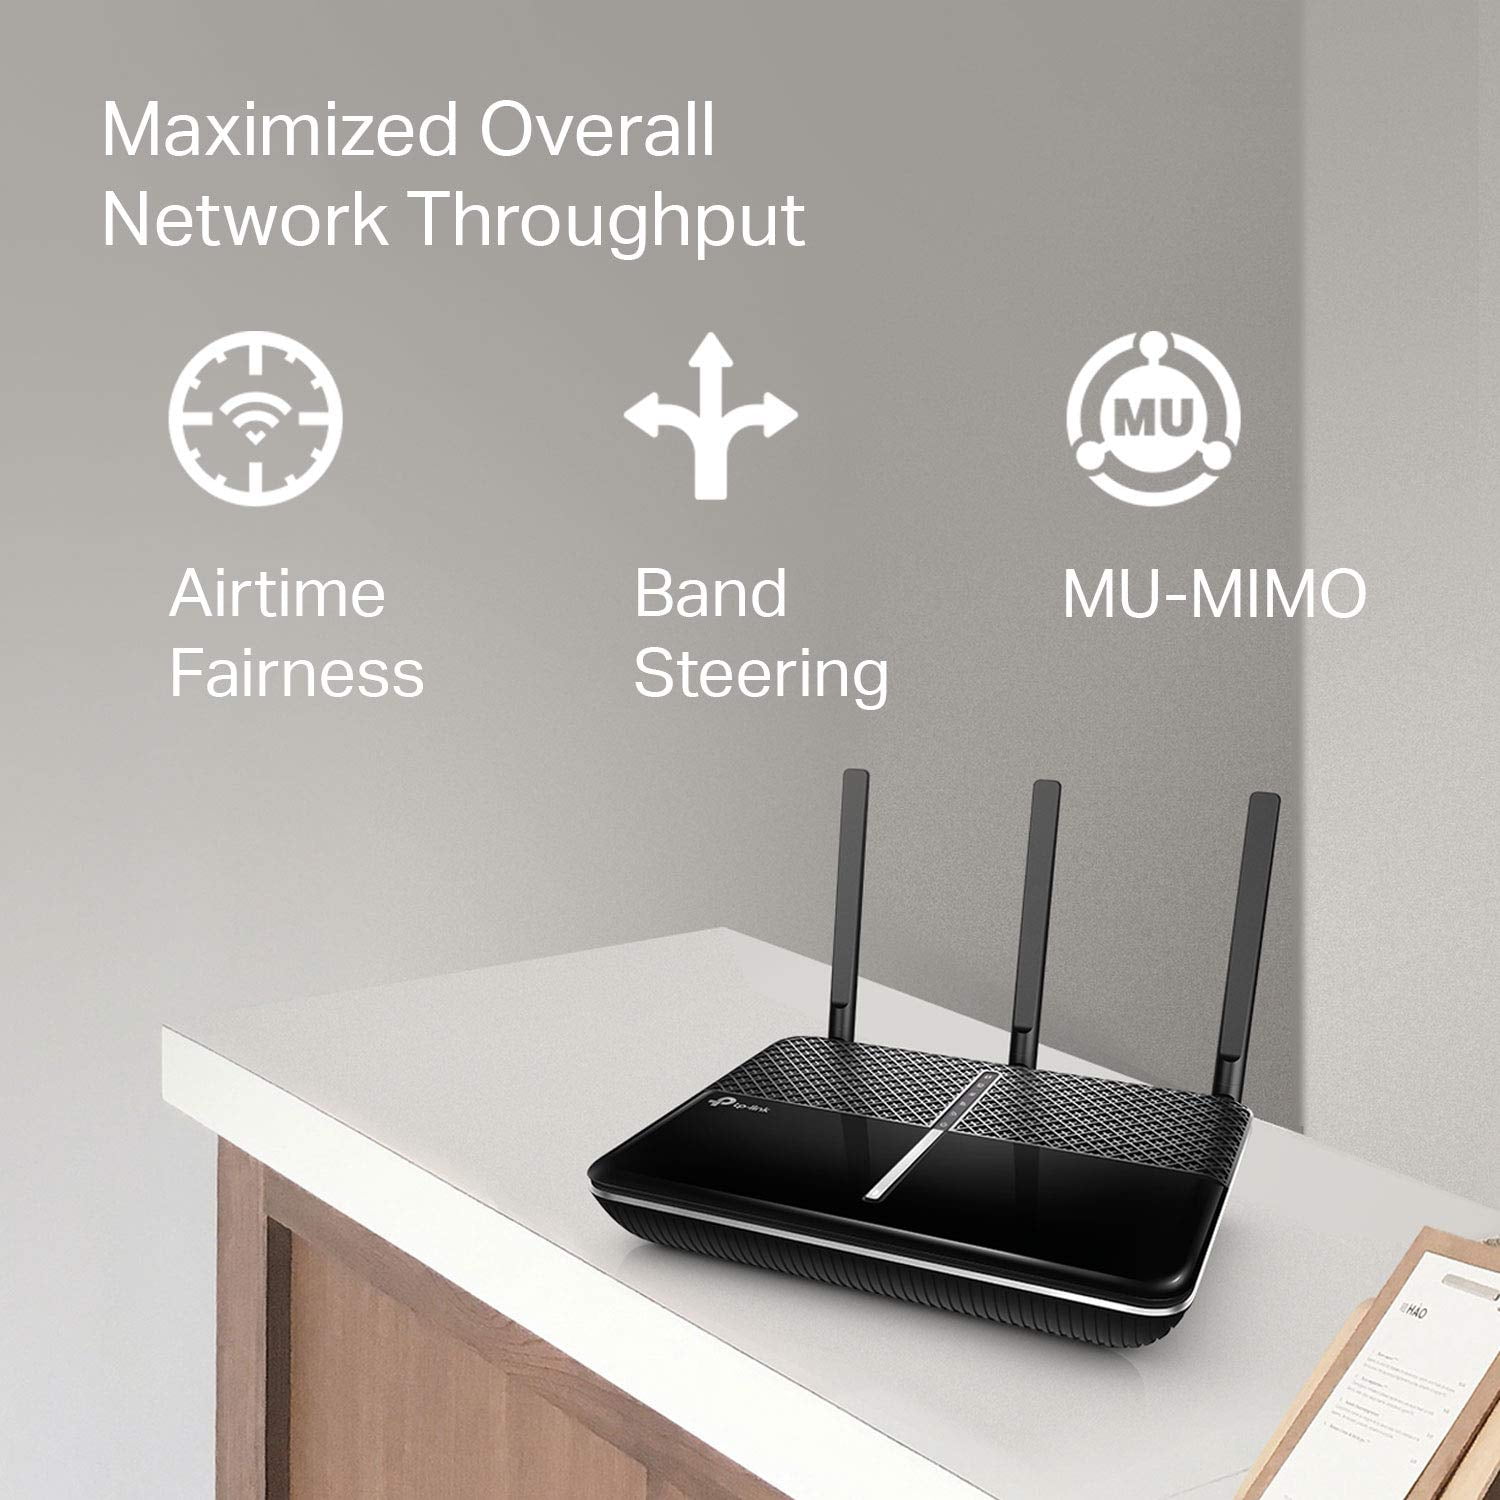 TP-Link AC2600 Smart WiFi Router - MU-MIMO, Gigabit Wireless Router, Full  Gigabit Ethernet Ports, Beamforming, Long Range Coverage, VPN Server, Works  